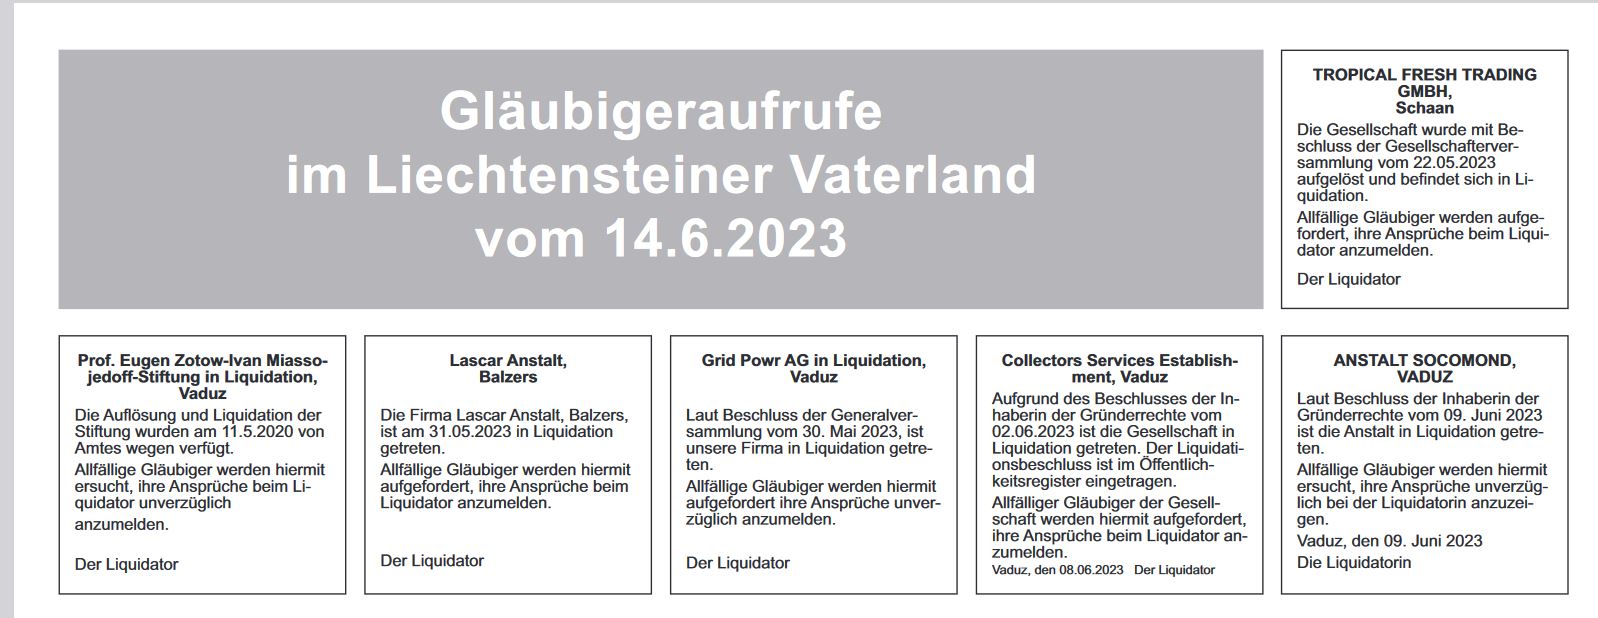 Vaterland_14_06_2023_Liquidation.JPG